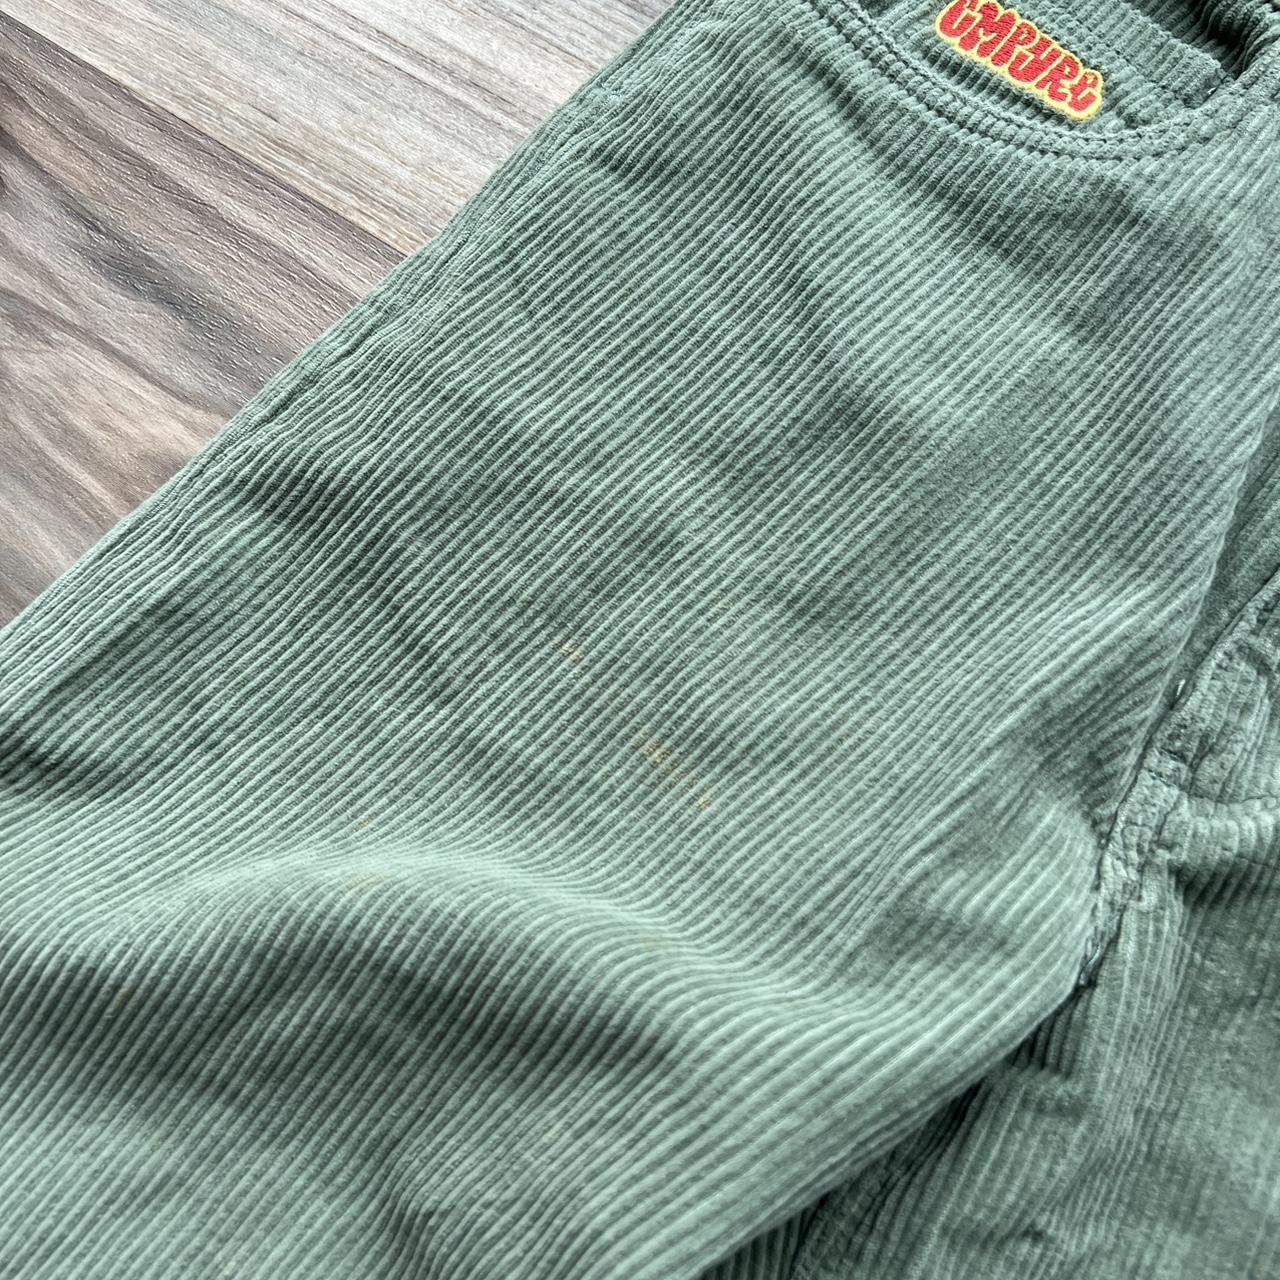 green empyre jeans, fits a 32 waist. no stains, - Depop